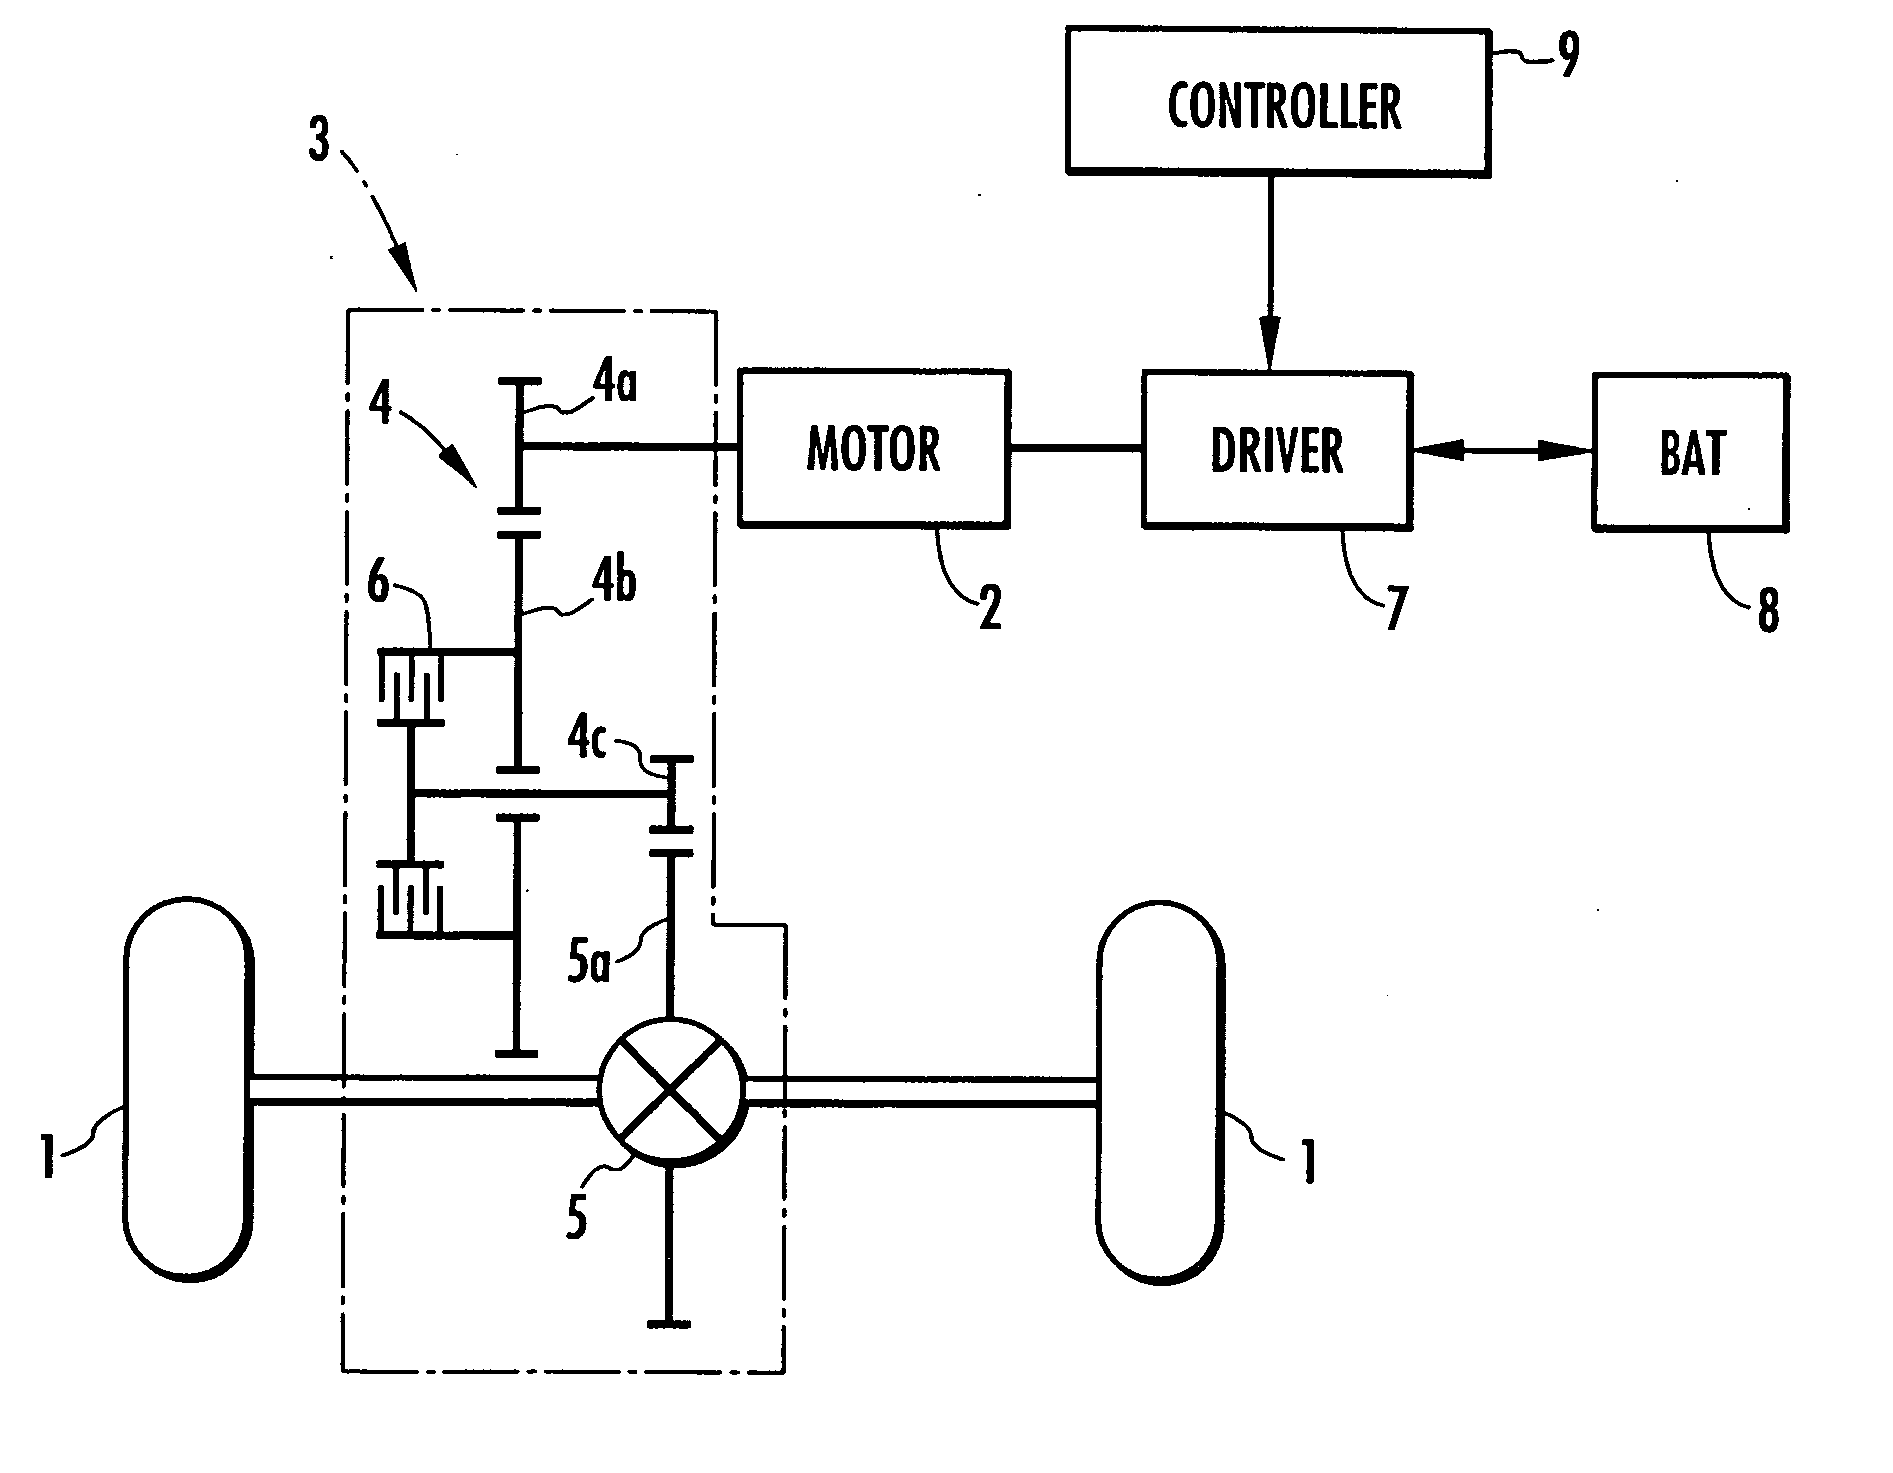 Hydraulic controller for hydraulic actuator